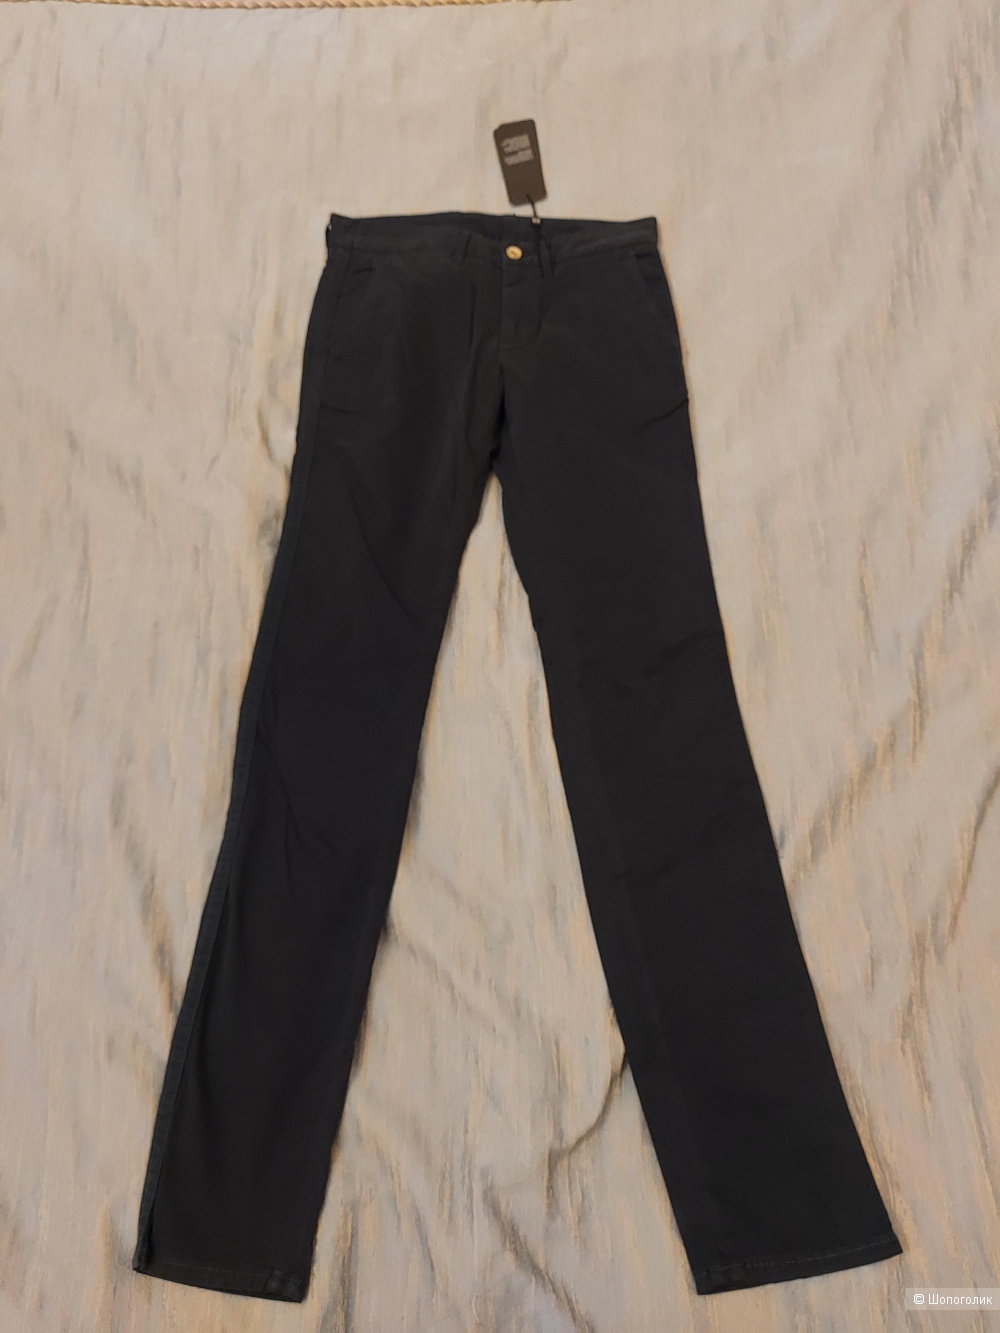 Мужские брюки Armani Exchange, 28 размер